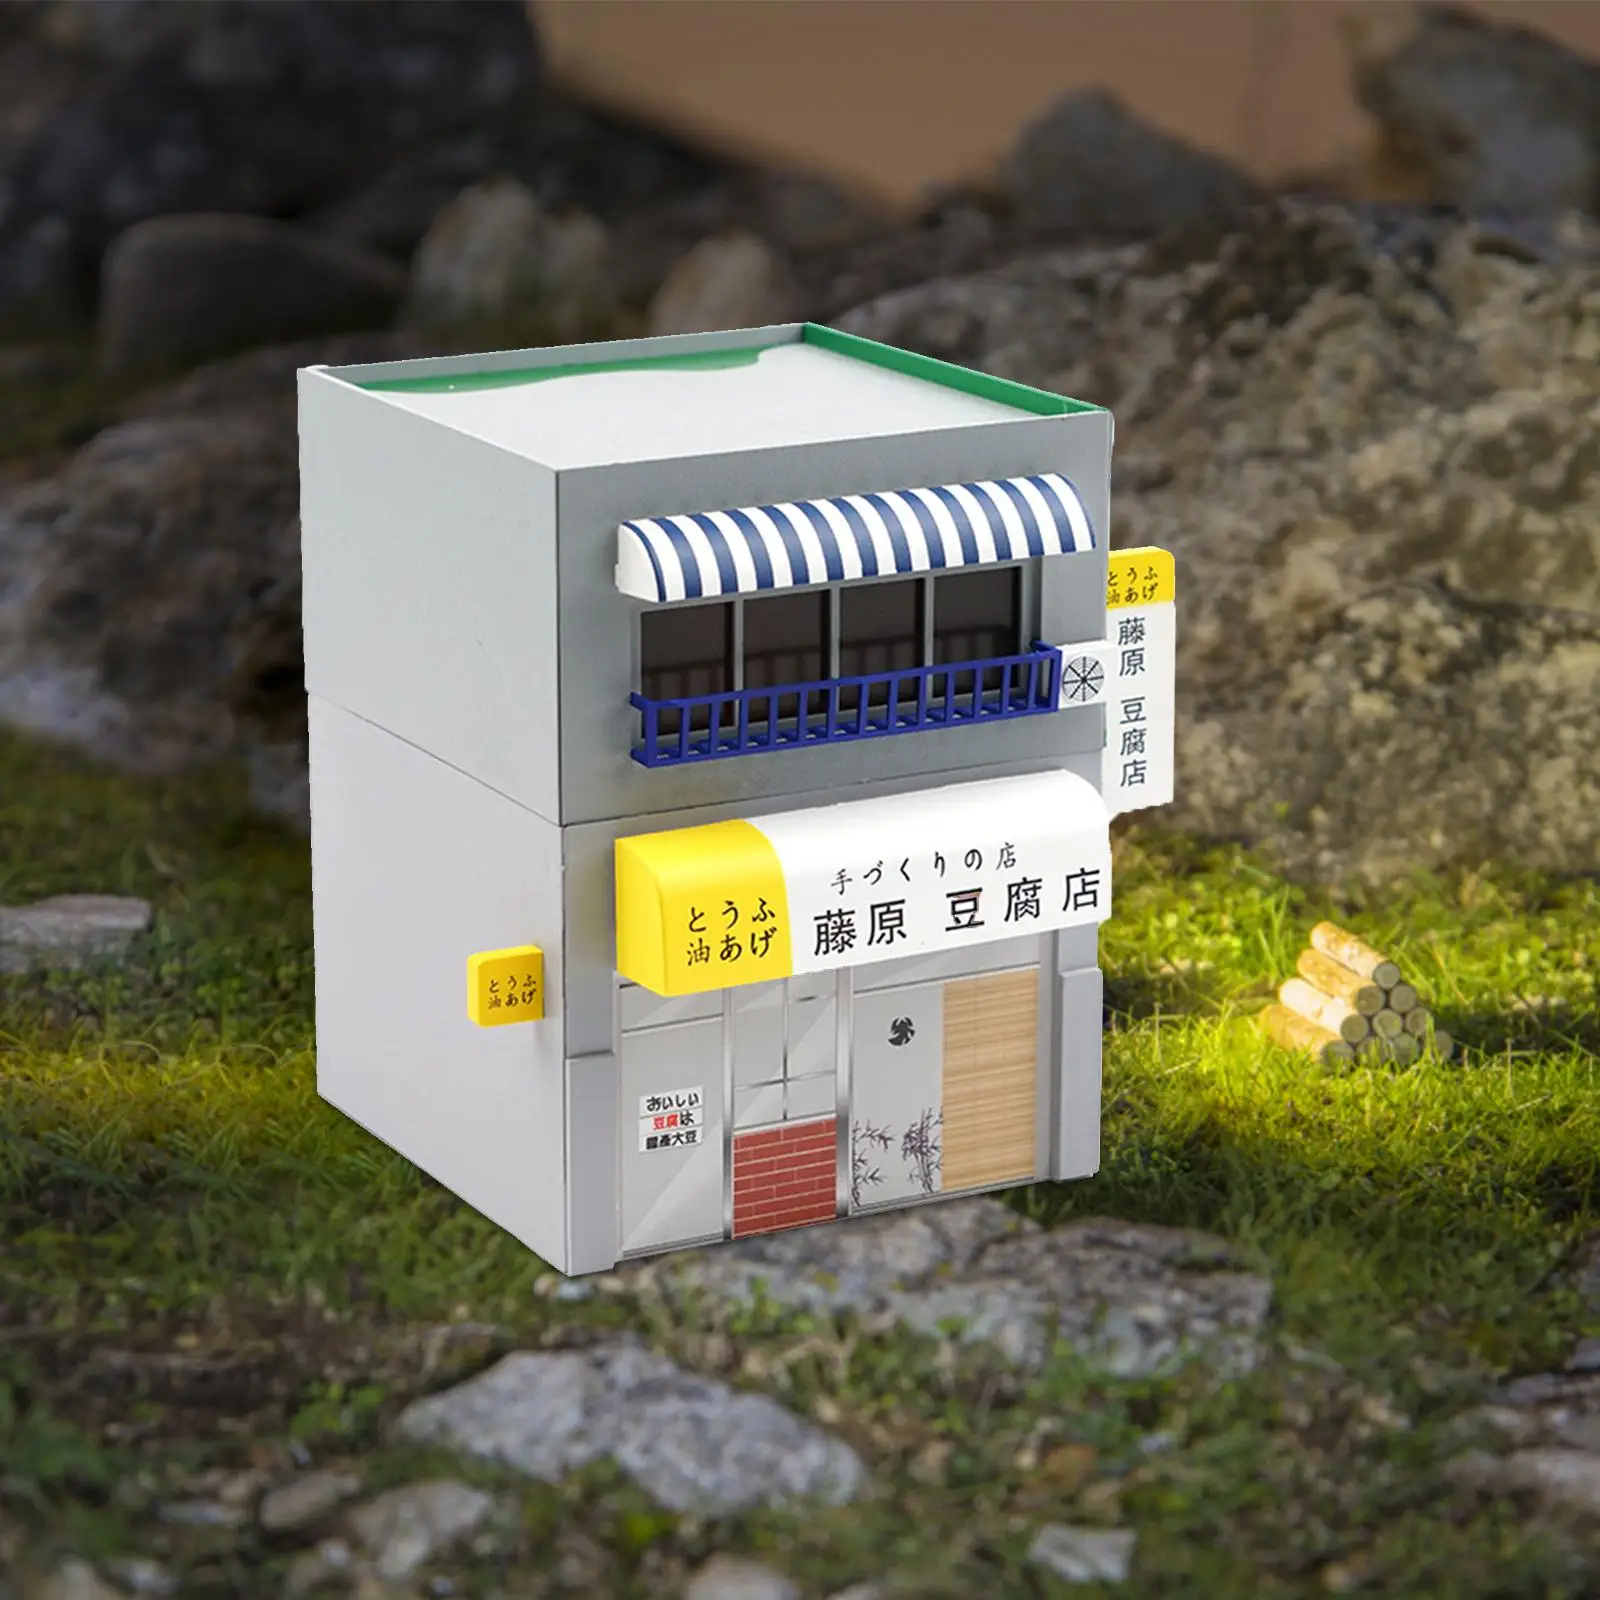 1:64 Scale Tofu Shop Diorama Model Micro Landscape Architectural Desktop Movie Props S Gauge Townscape Scenery Store Decoration